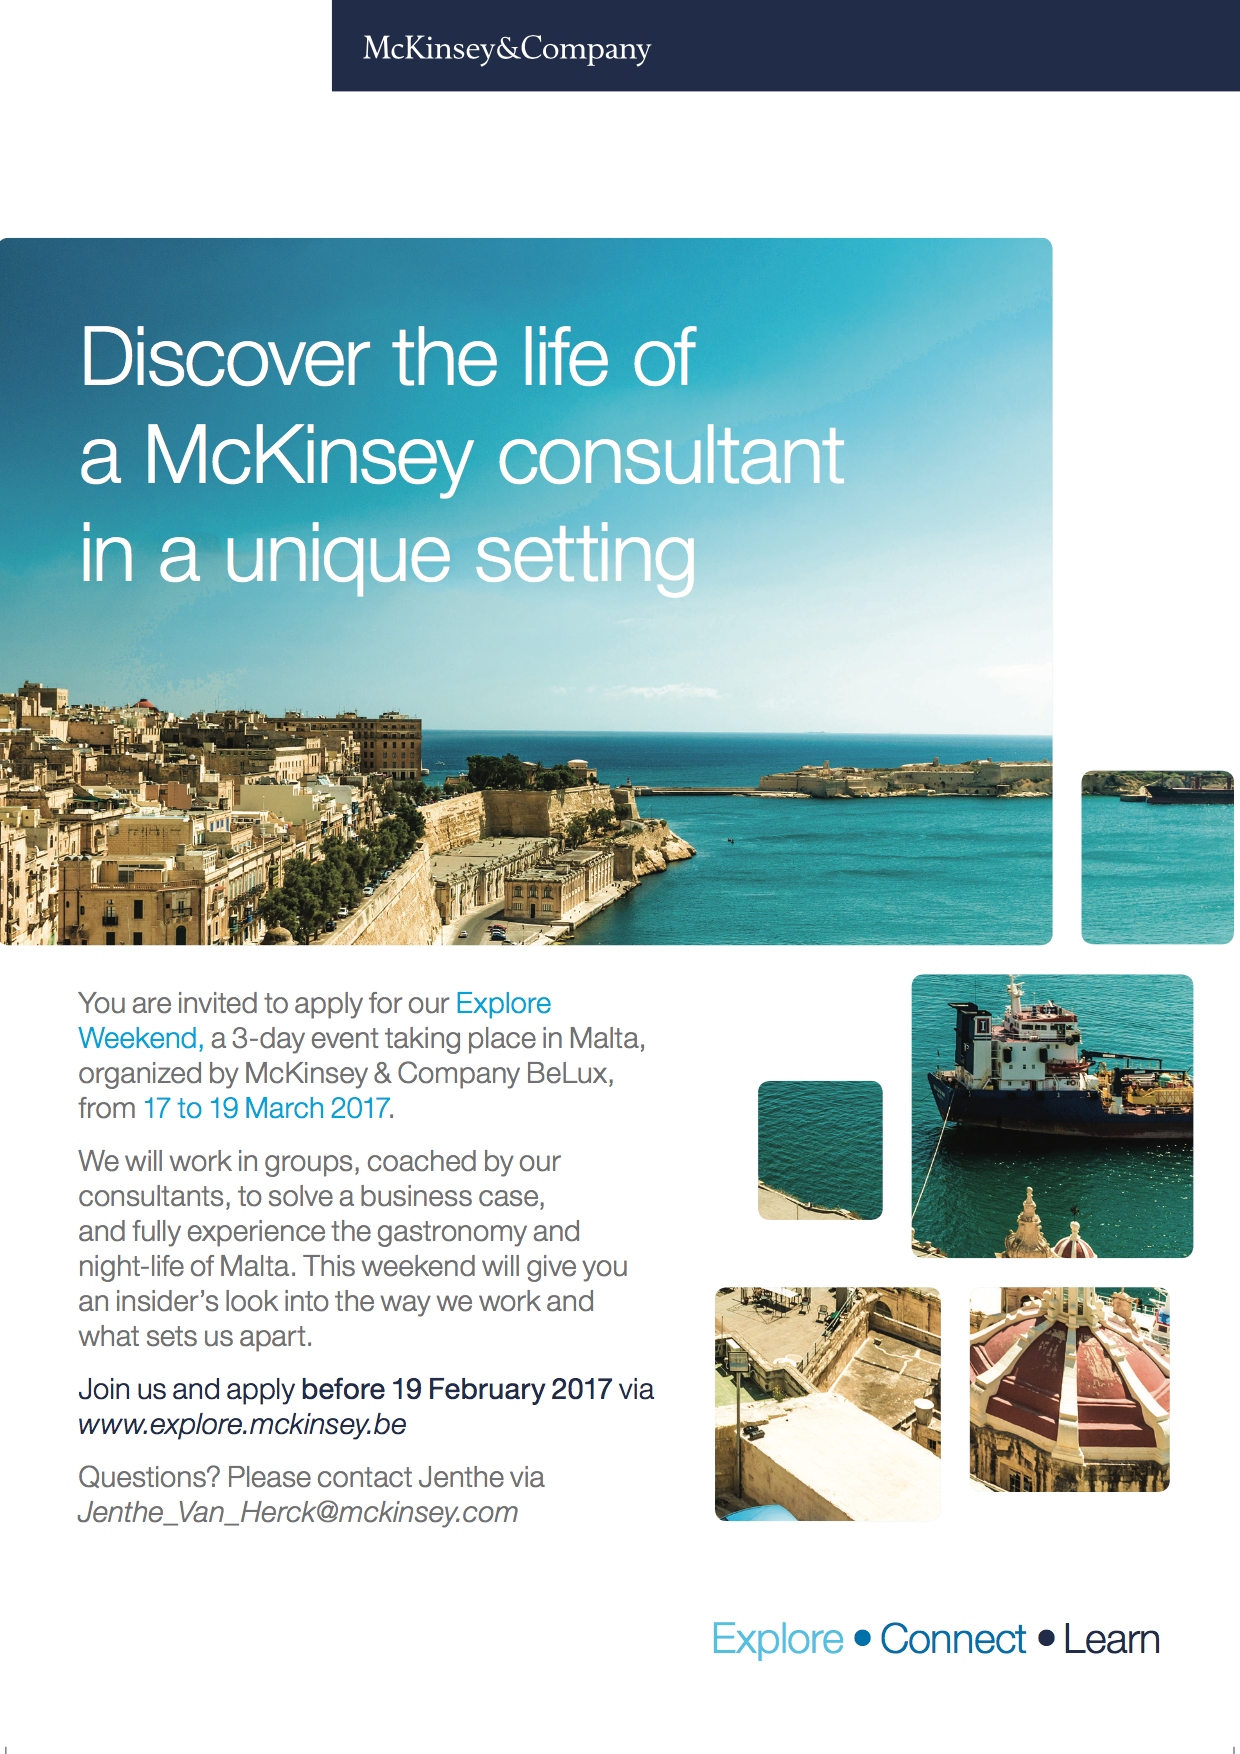 McKinsey & Company Explore Weekend